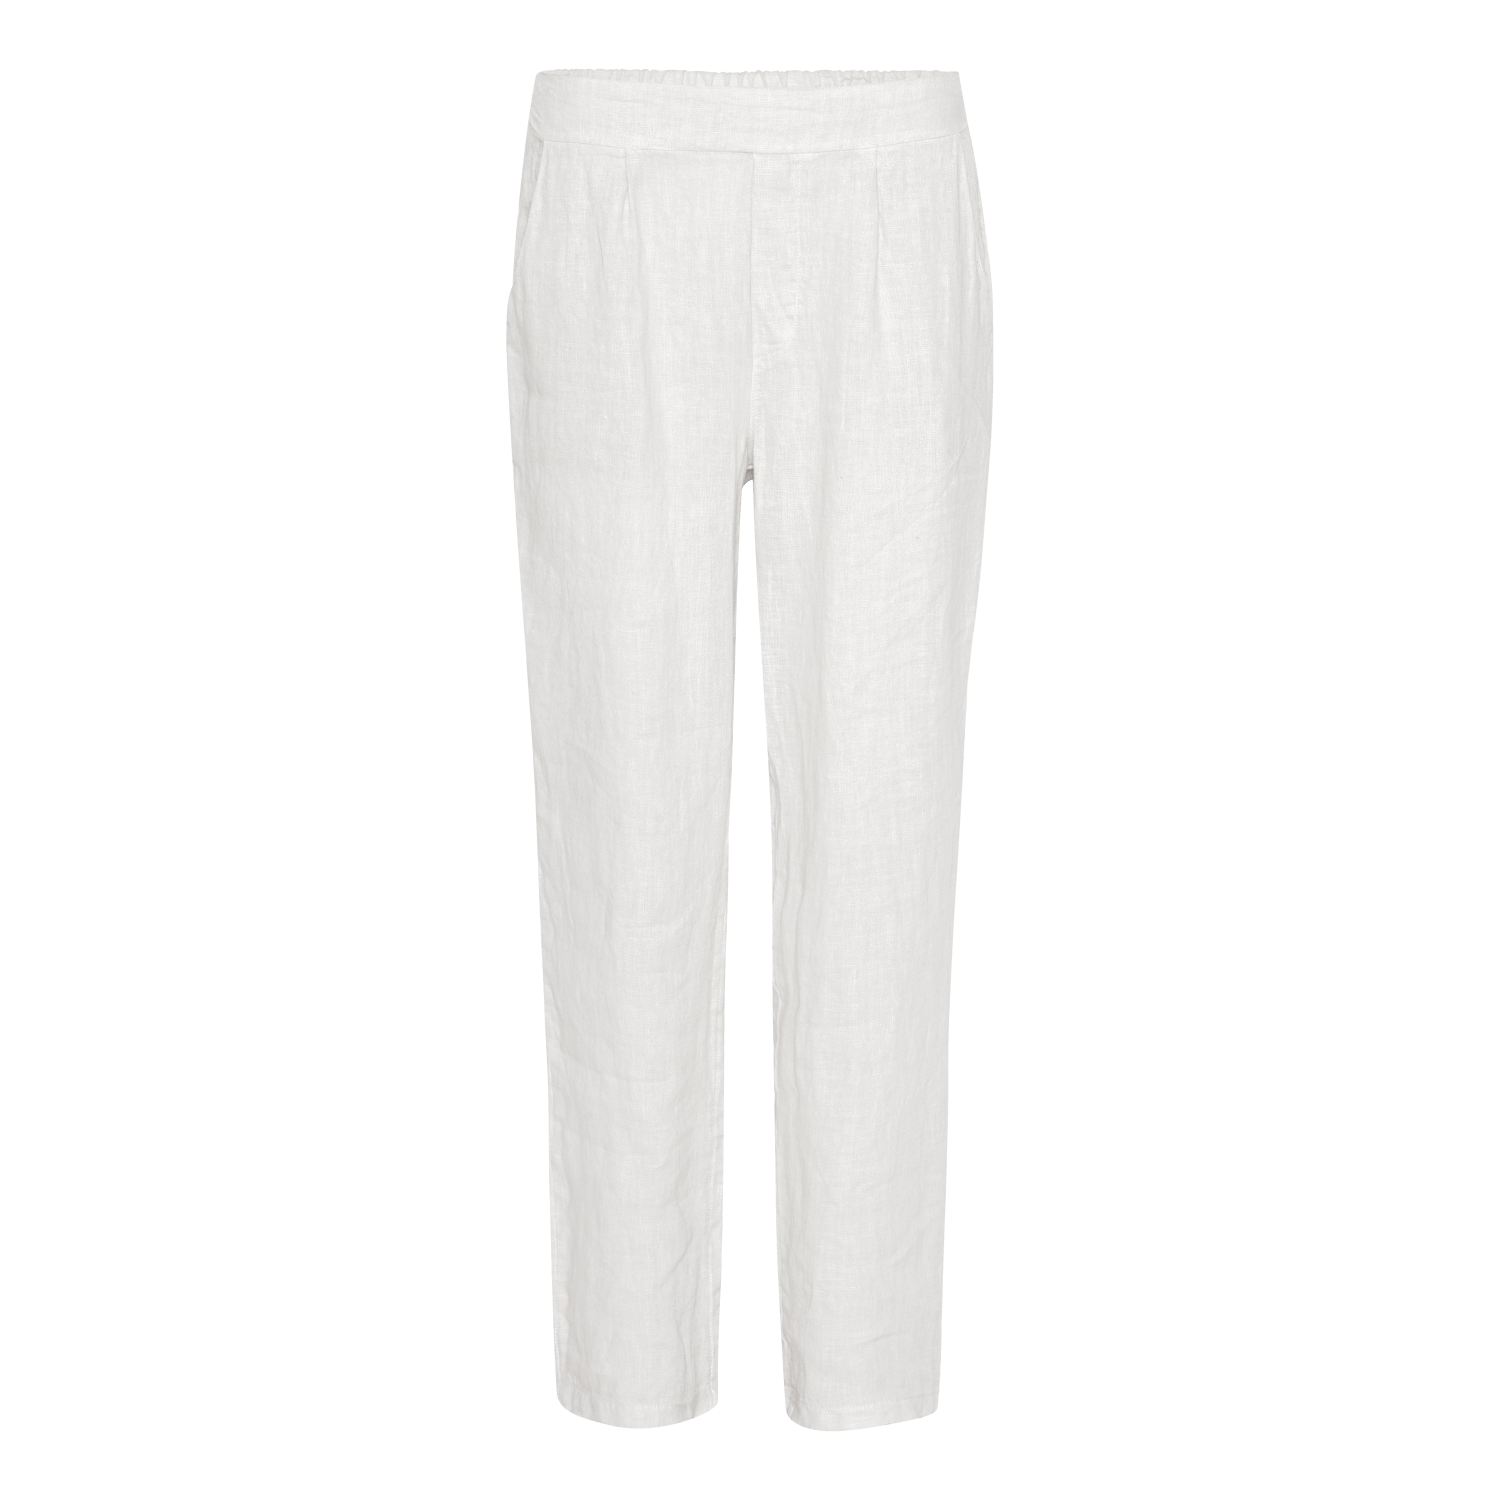 Hvide hørbukser til kvinder med elastisk talje, sidelommer og et løstsiddende snit